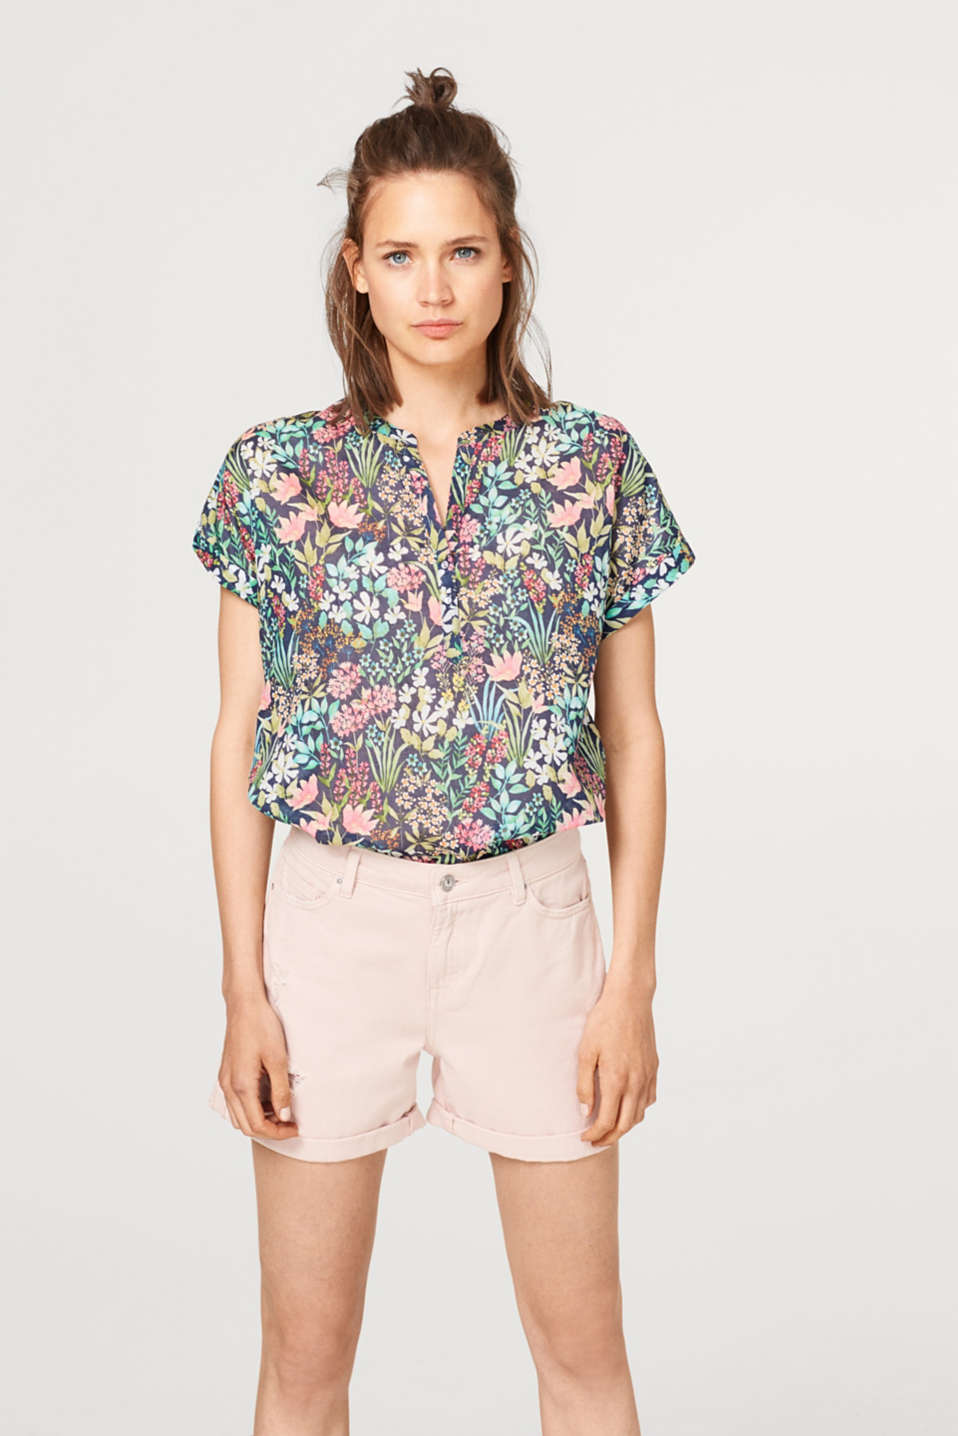 Esprit - Henley blouse with floral print, 100% cotton at our Online Shop